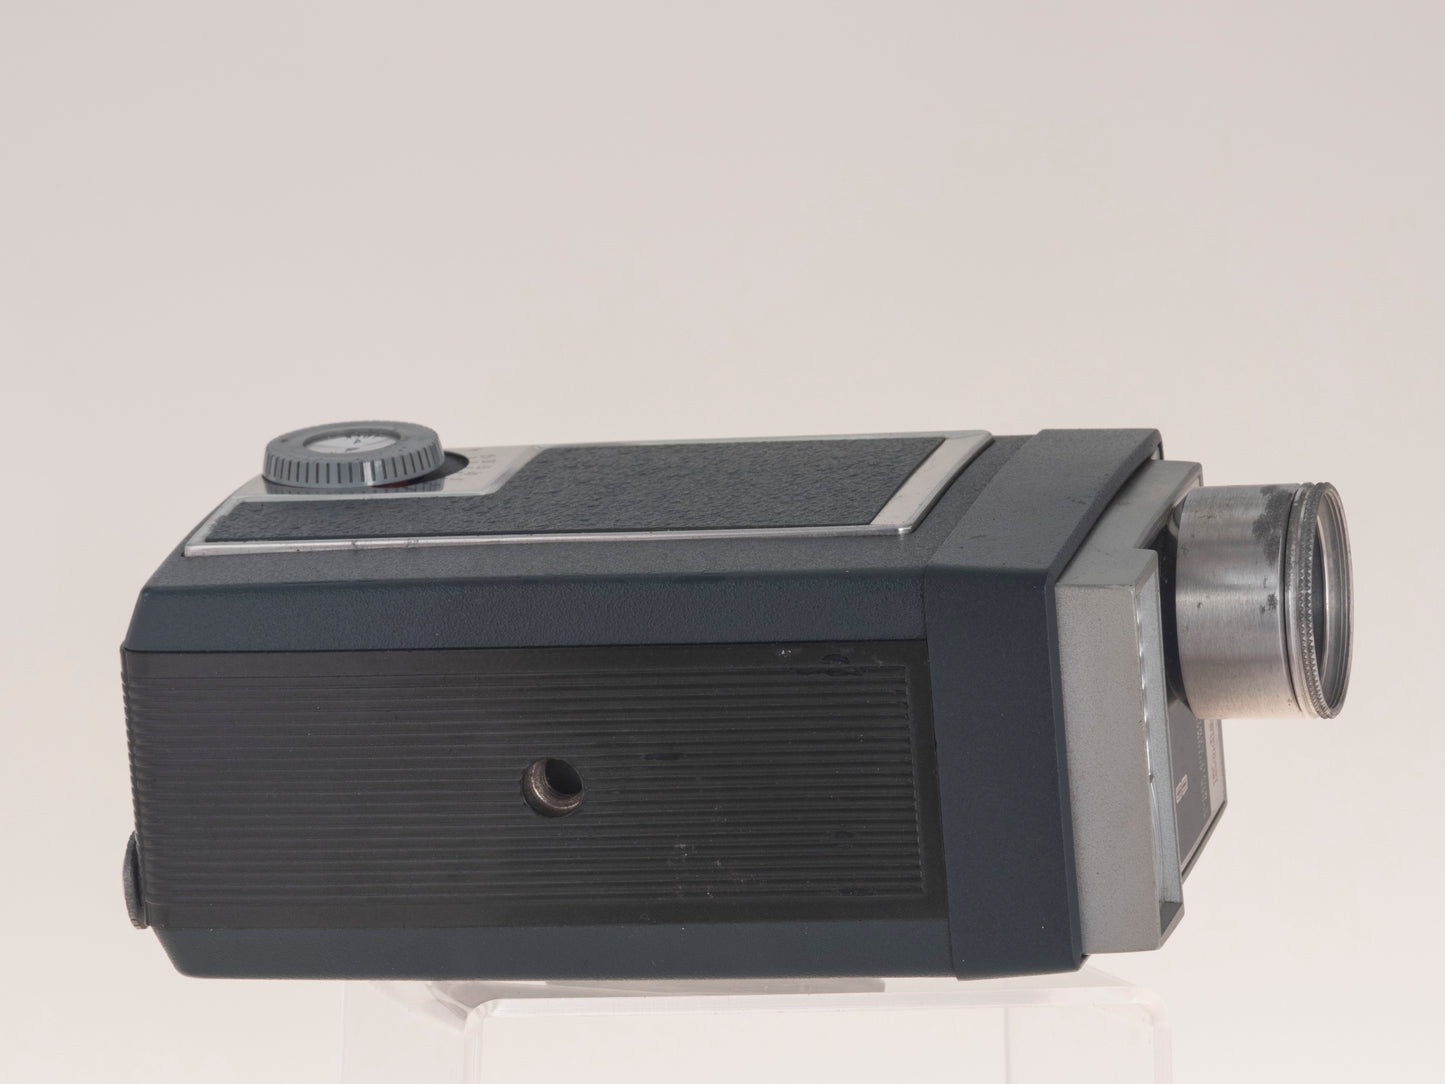 Kodak Automatic 8 8mm movie camera